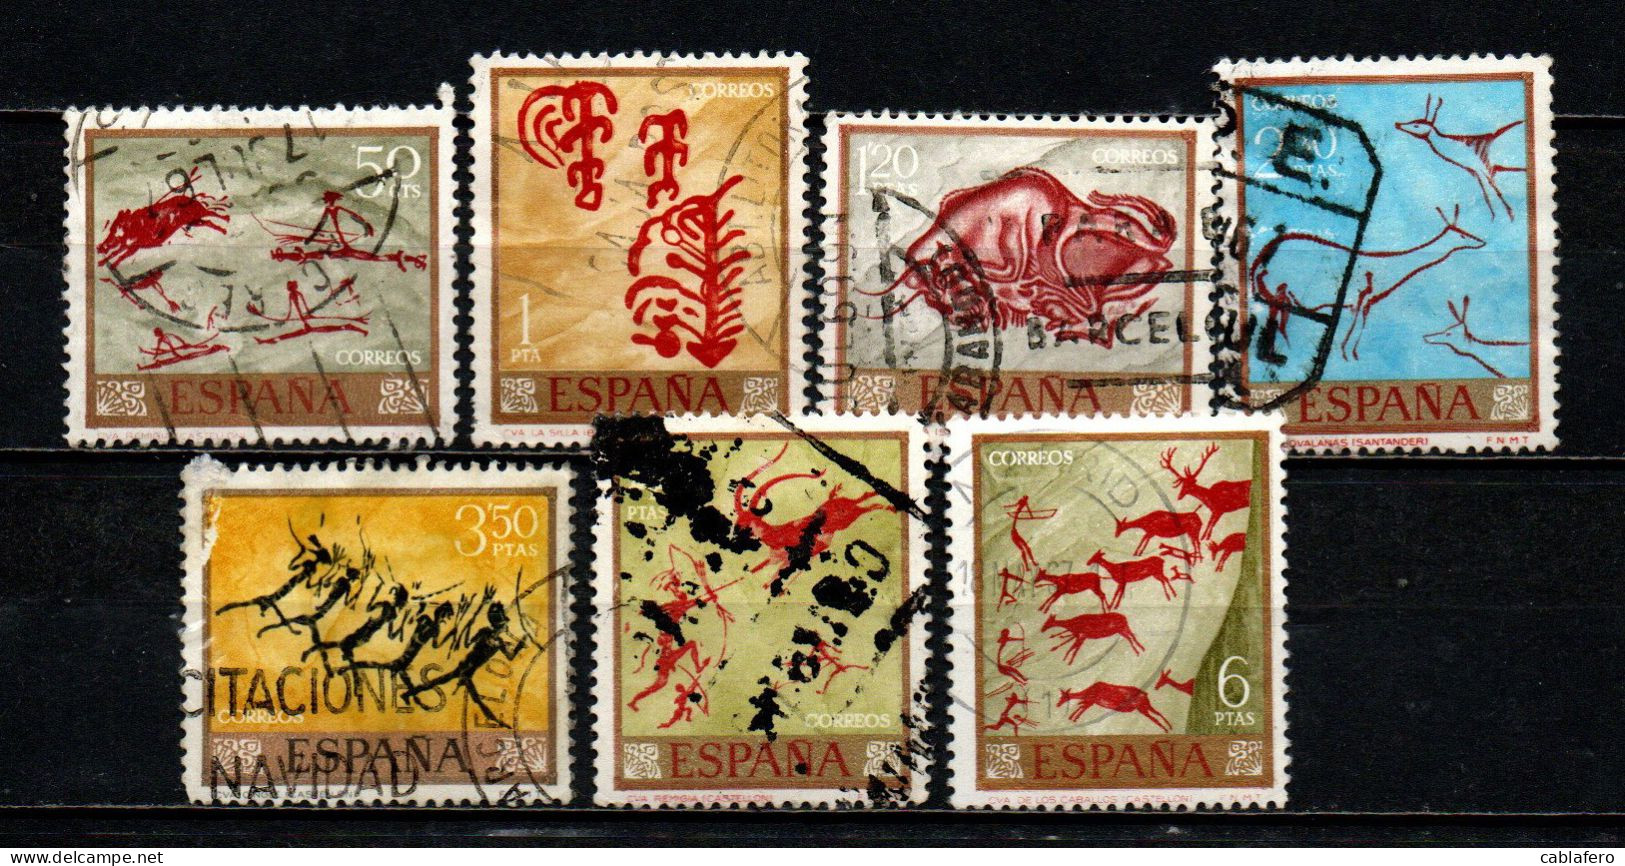 SPAGNA - 1967 - PITTURE RUPESTRI - USATI - Used Stamps